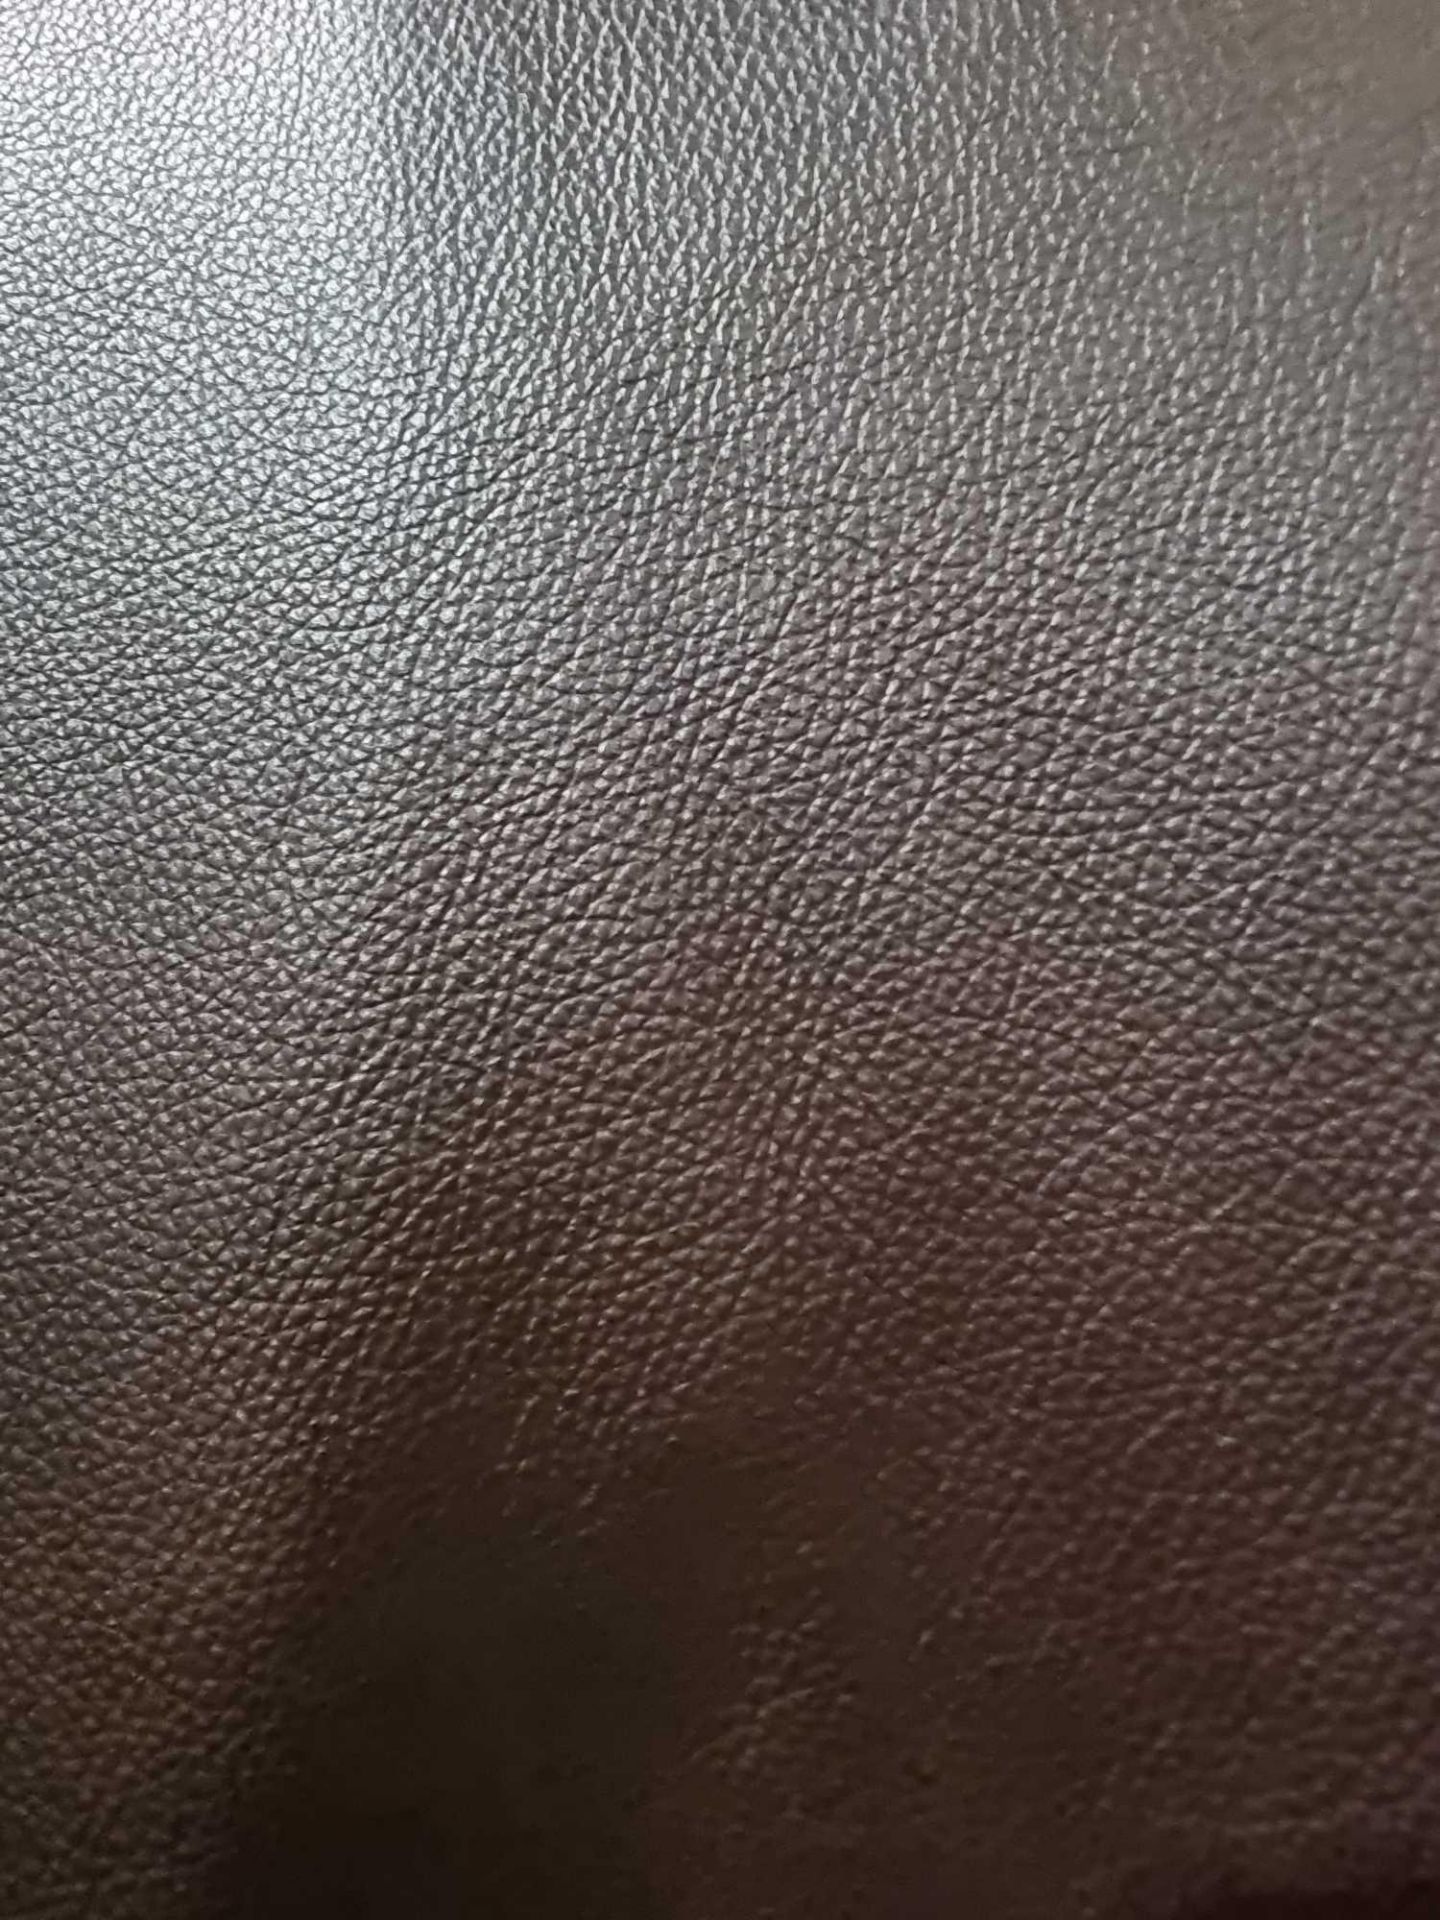 Mastrotto Hudson Chocolate Leather Hide approximately 2.7mÂ² 1.8 x 1.5cm ( Hide No,250) - Bild 2 aus 2